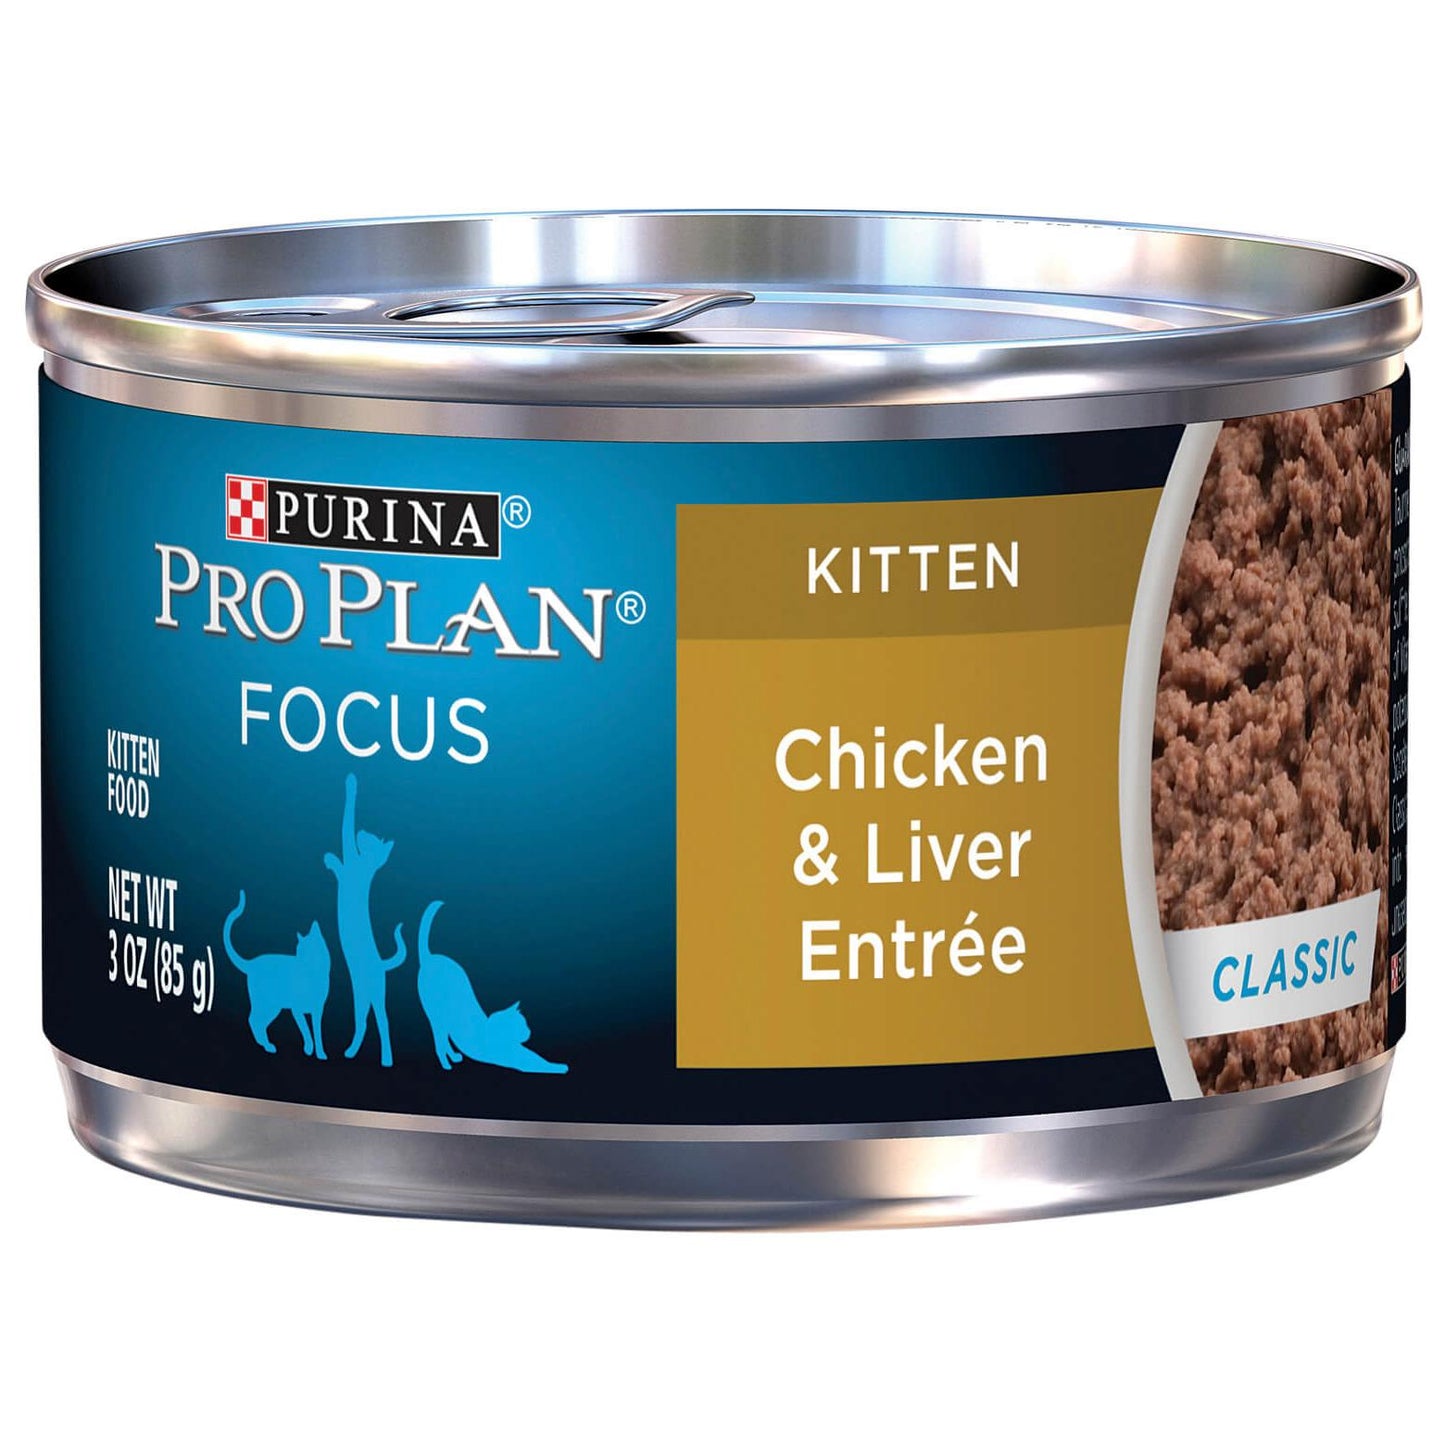 Pro Plan Focus Kitten Chicken & Liver Entree Classic Wet Cat Food 85G